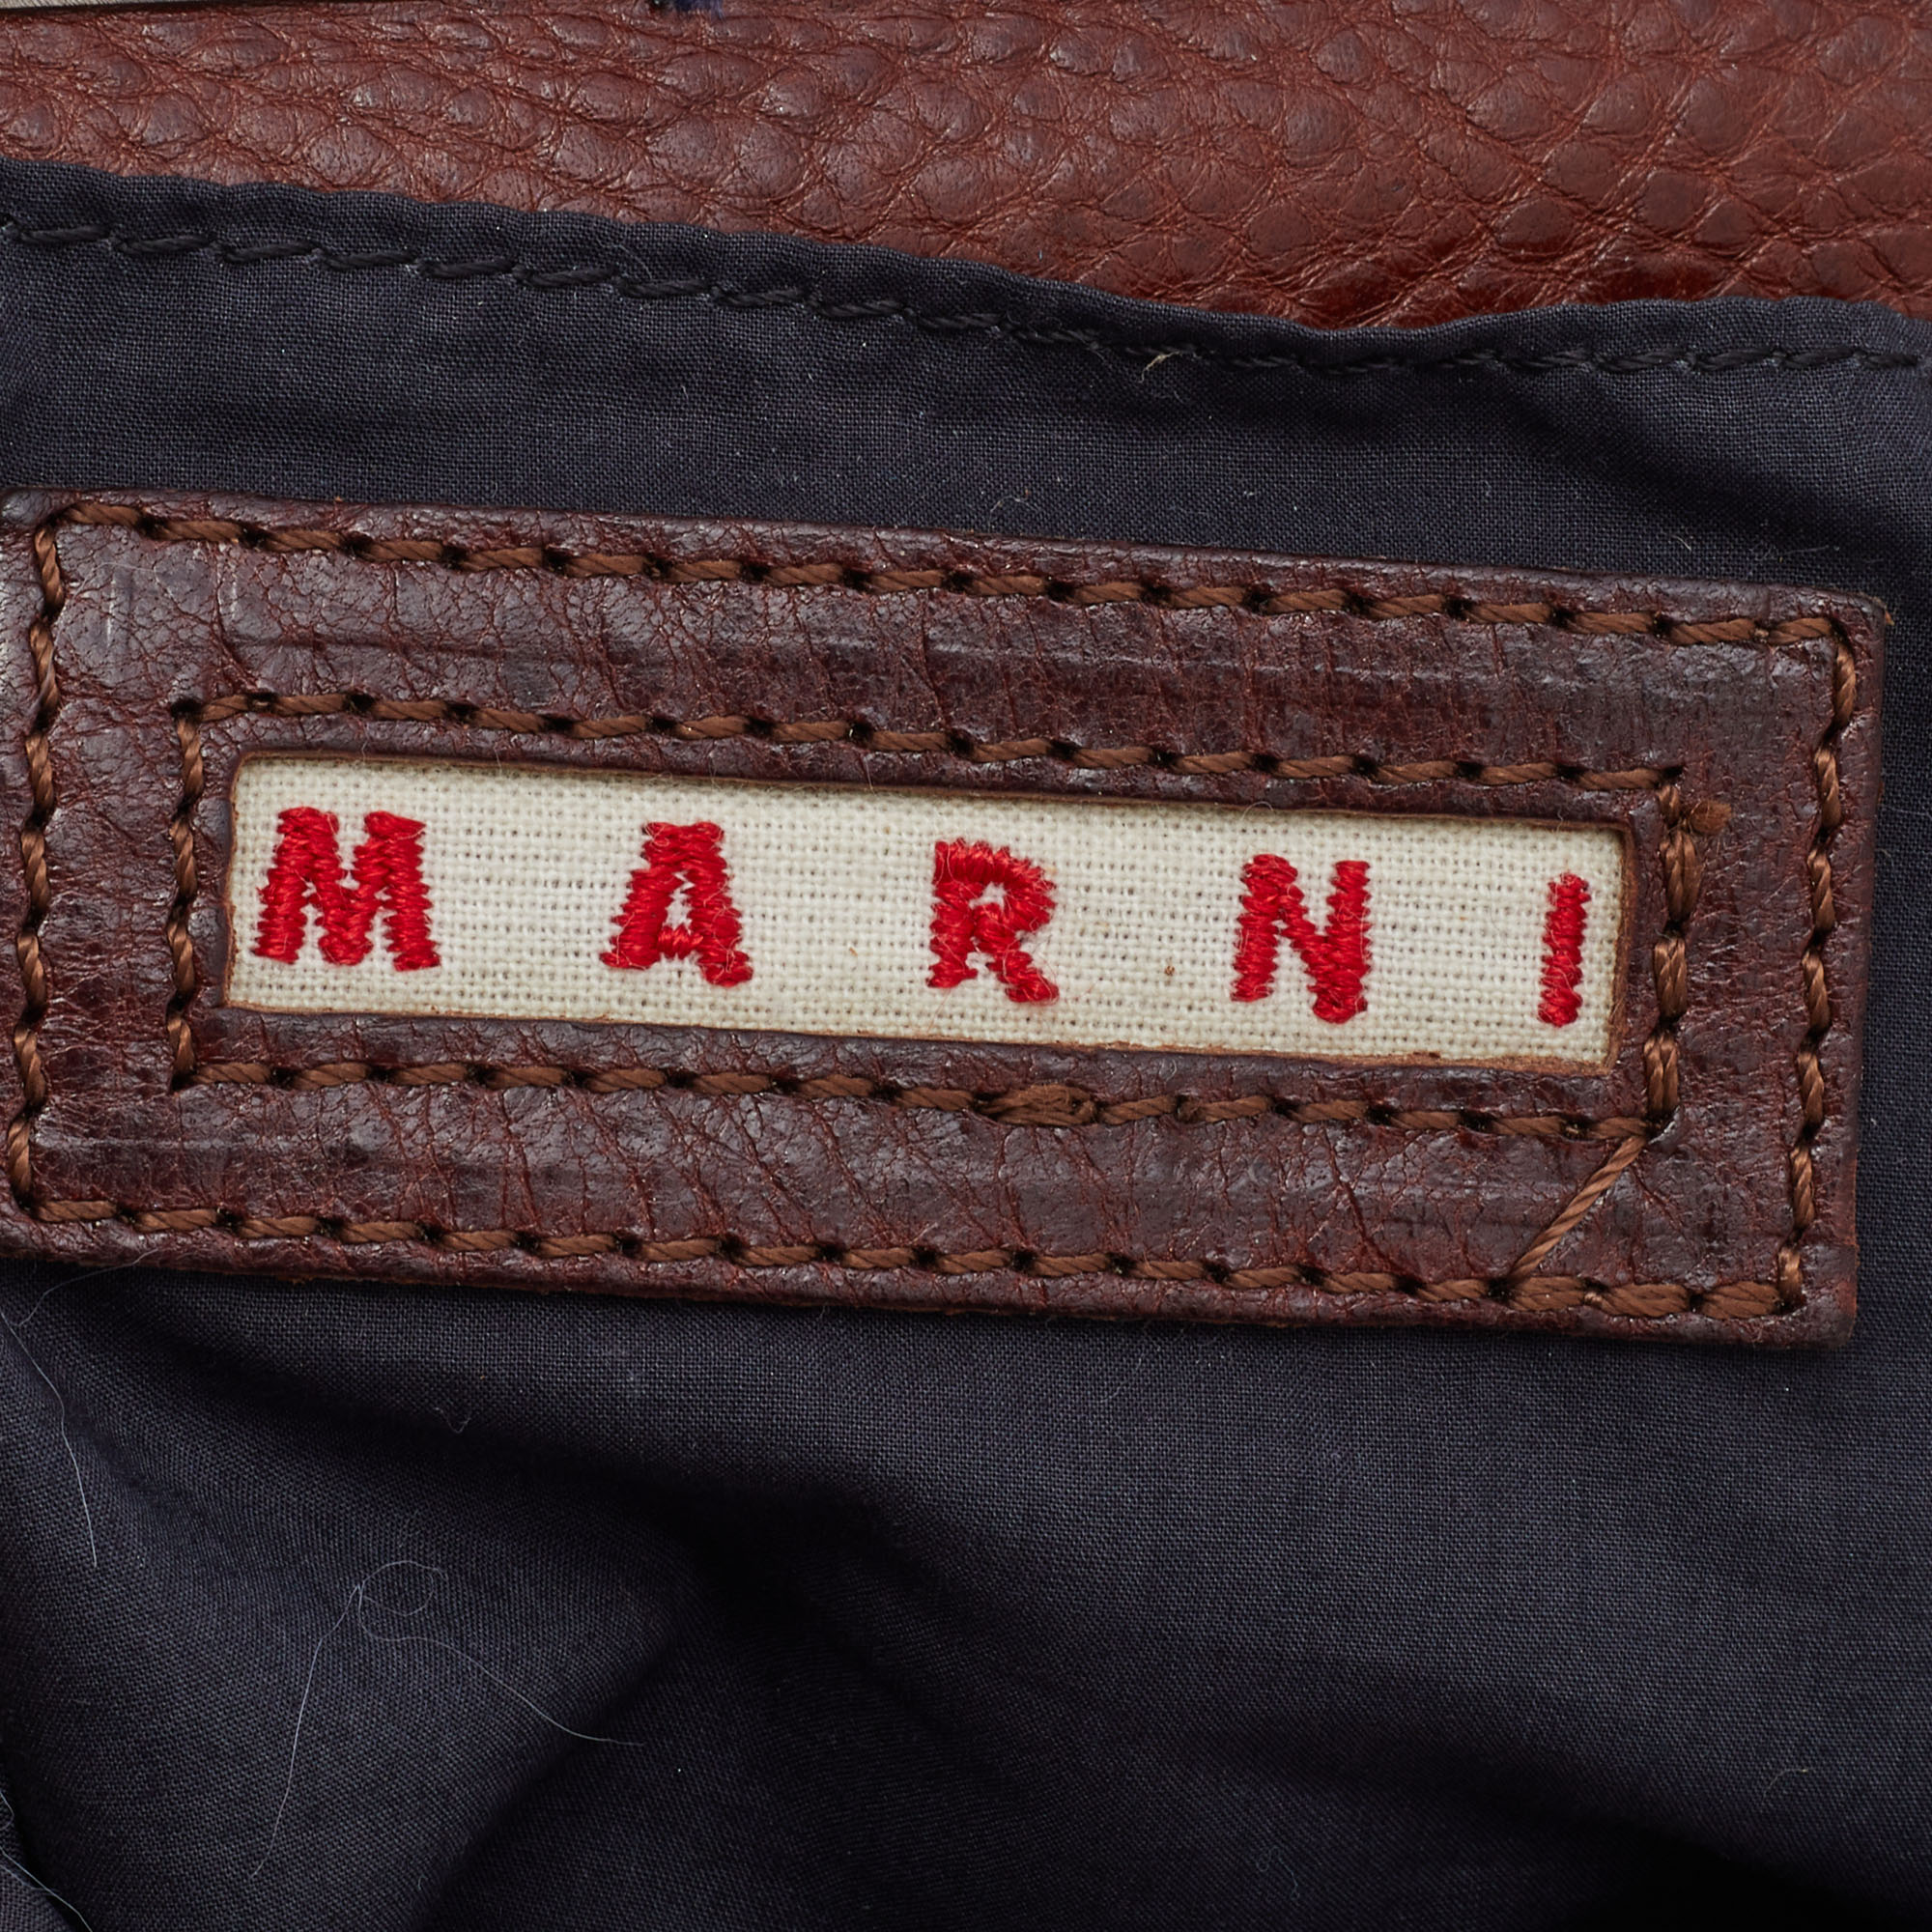 Marni Navy Blue Embroidered Fabric Frame Embellished Clutch Bag